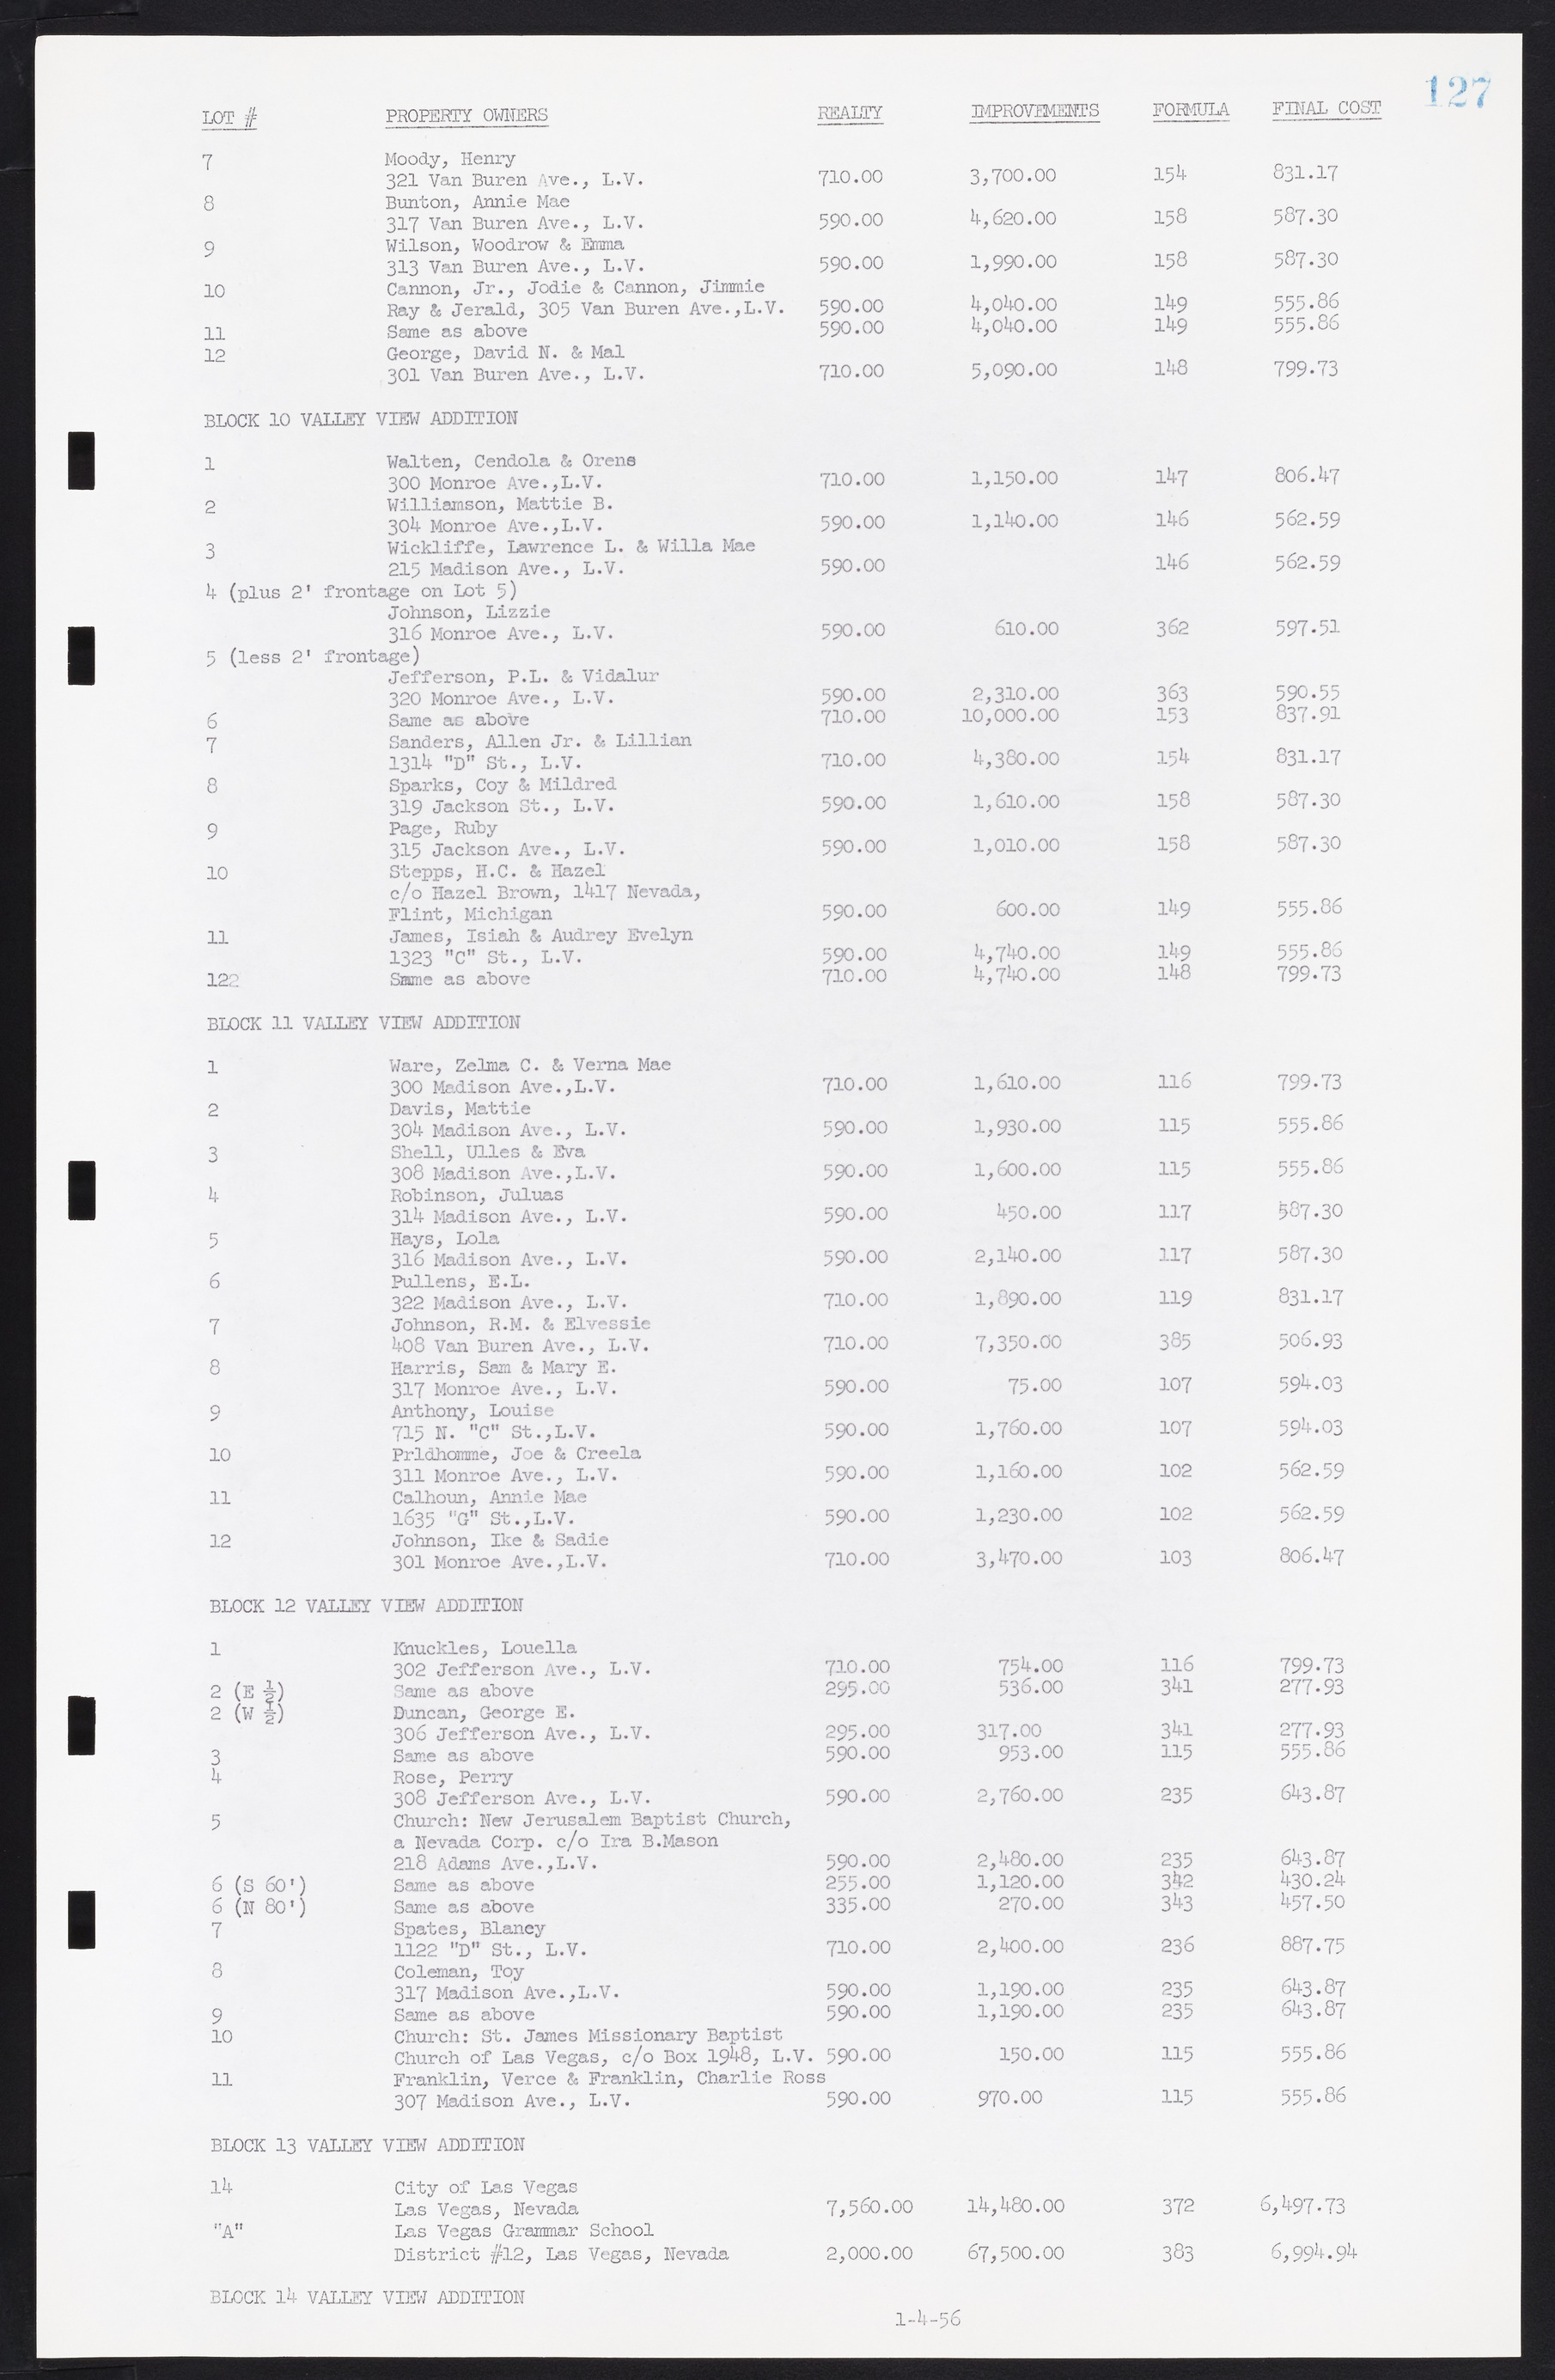 Las Vegas City Commission Minutes, September 21, 1955 to November 20, 1957, lvc000010-137